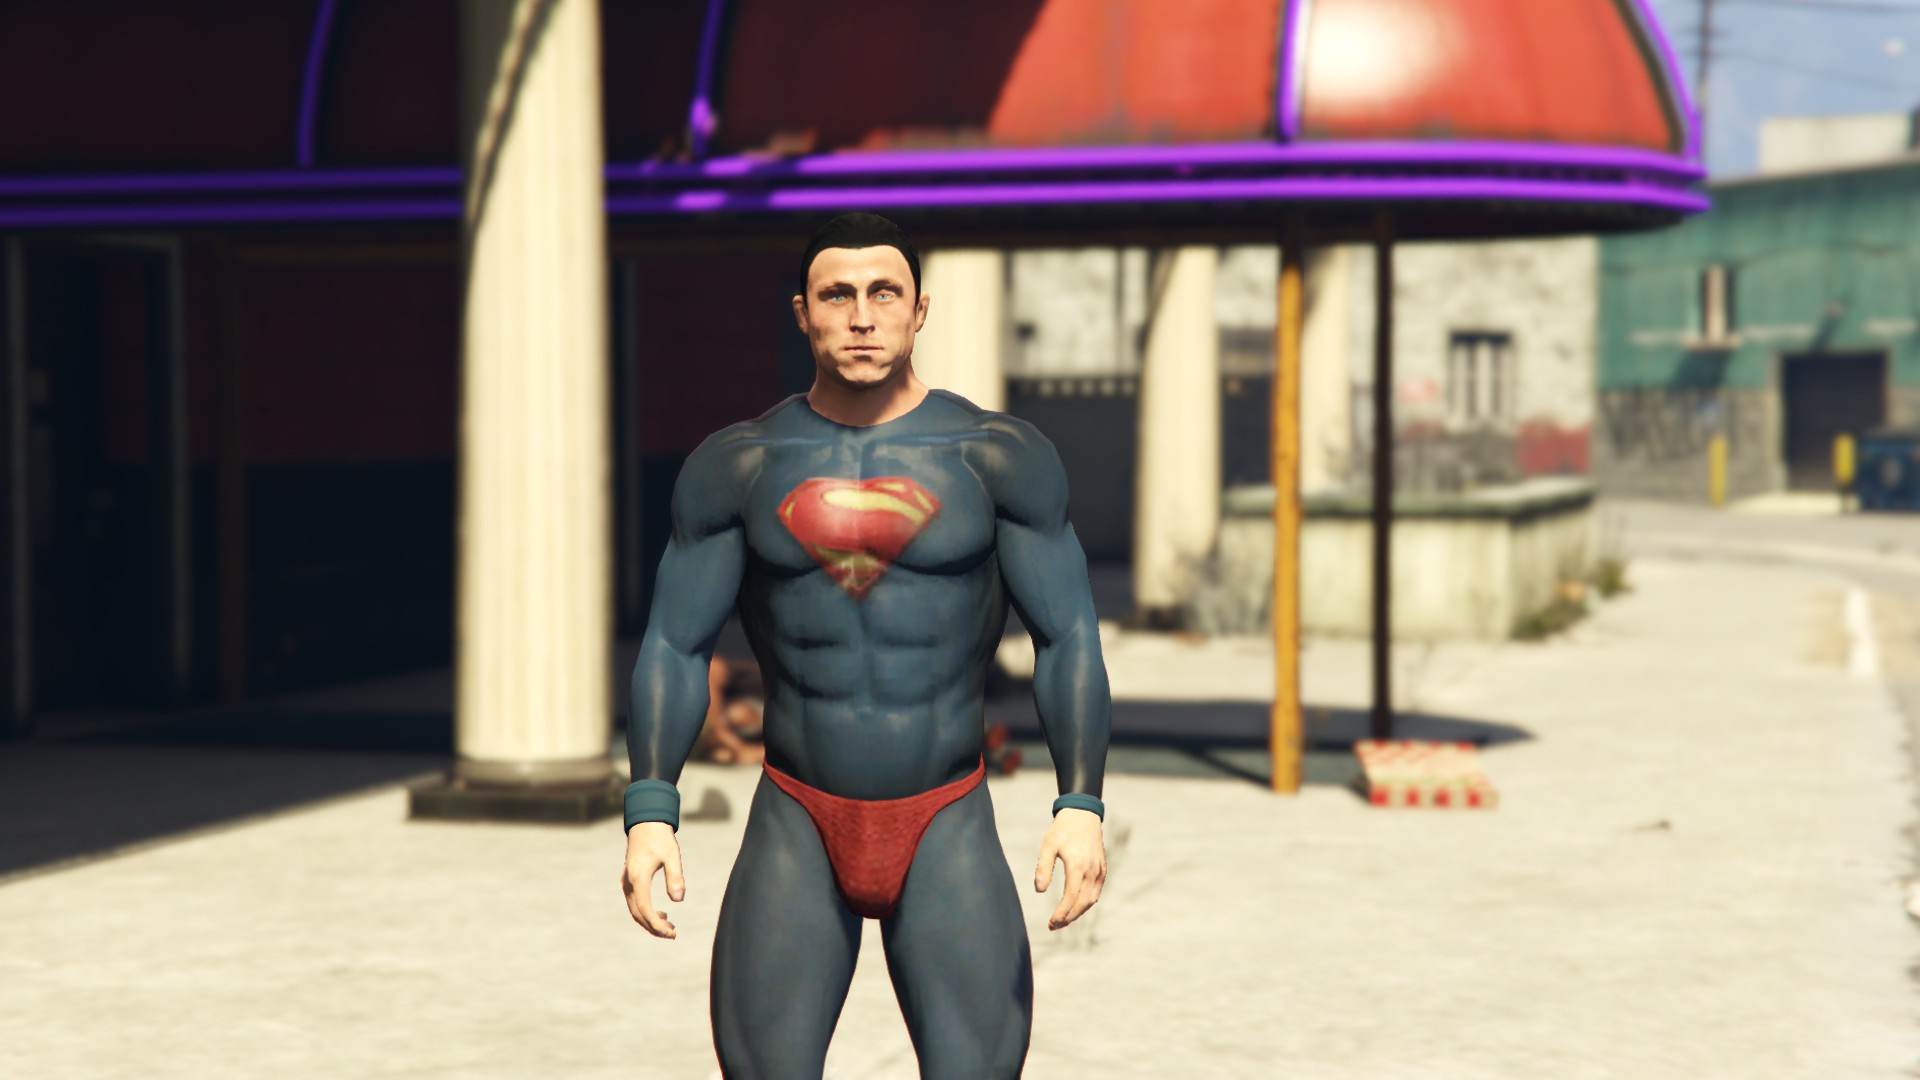 Gta 5 superman chat pc